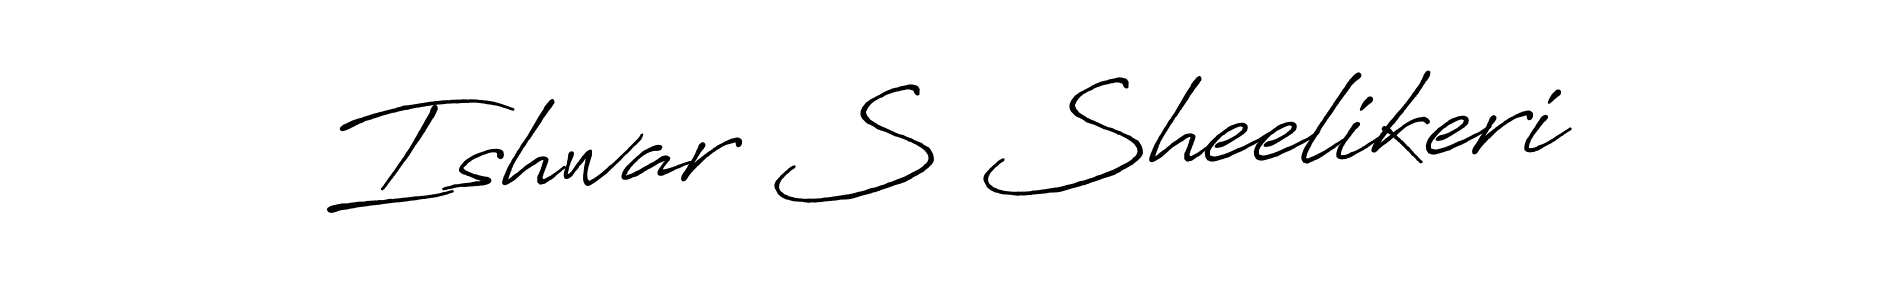 How to Draw Ishwar S Sheelikeri signature style? Antro_Vectra_Bolder is a latest design signature styles for name Ishwar S Sheelikeri. Ishwar S Sheelikeri signature style 7 images and pictures png